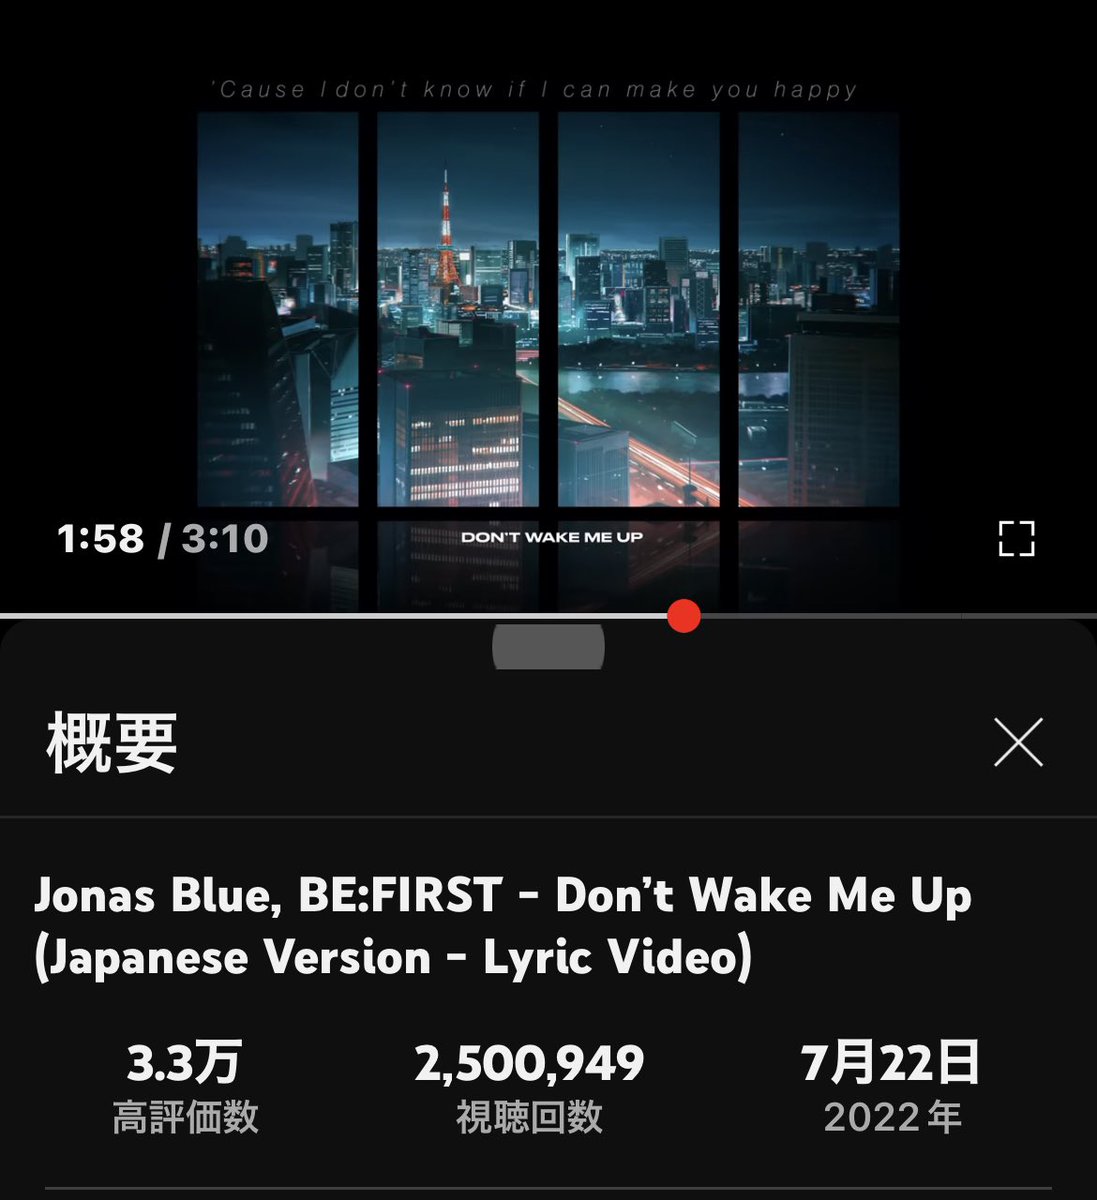 🌸祝💐250万回再生🌸

Don‘t Wake Me Up 
Jonas Blue , BE:FIRST

 #DontWakeMeUp 
 #JonasBlue
 #BEFIRST

❀ﾟ*❁ﾟ*❁｡ﾟ。*❀ﾟ*❁｡ﾟ❀ﾟ🌸

youtu.be/H_Nnj6A0THo